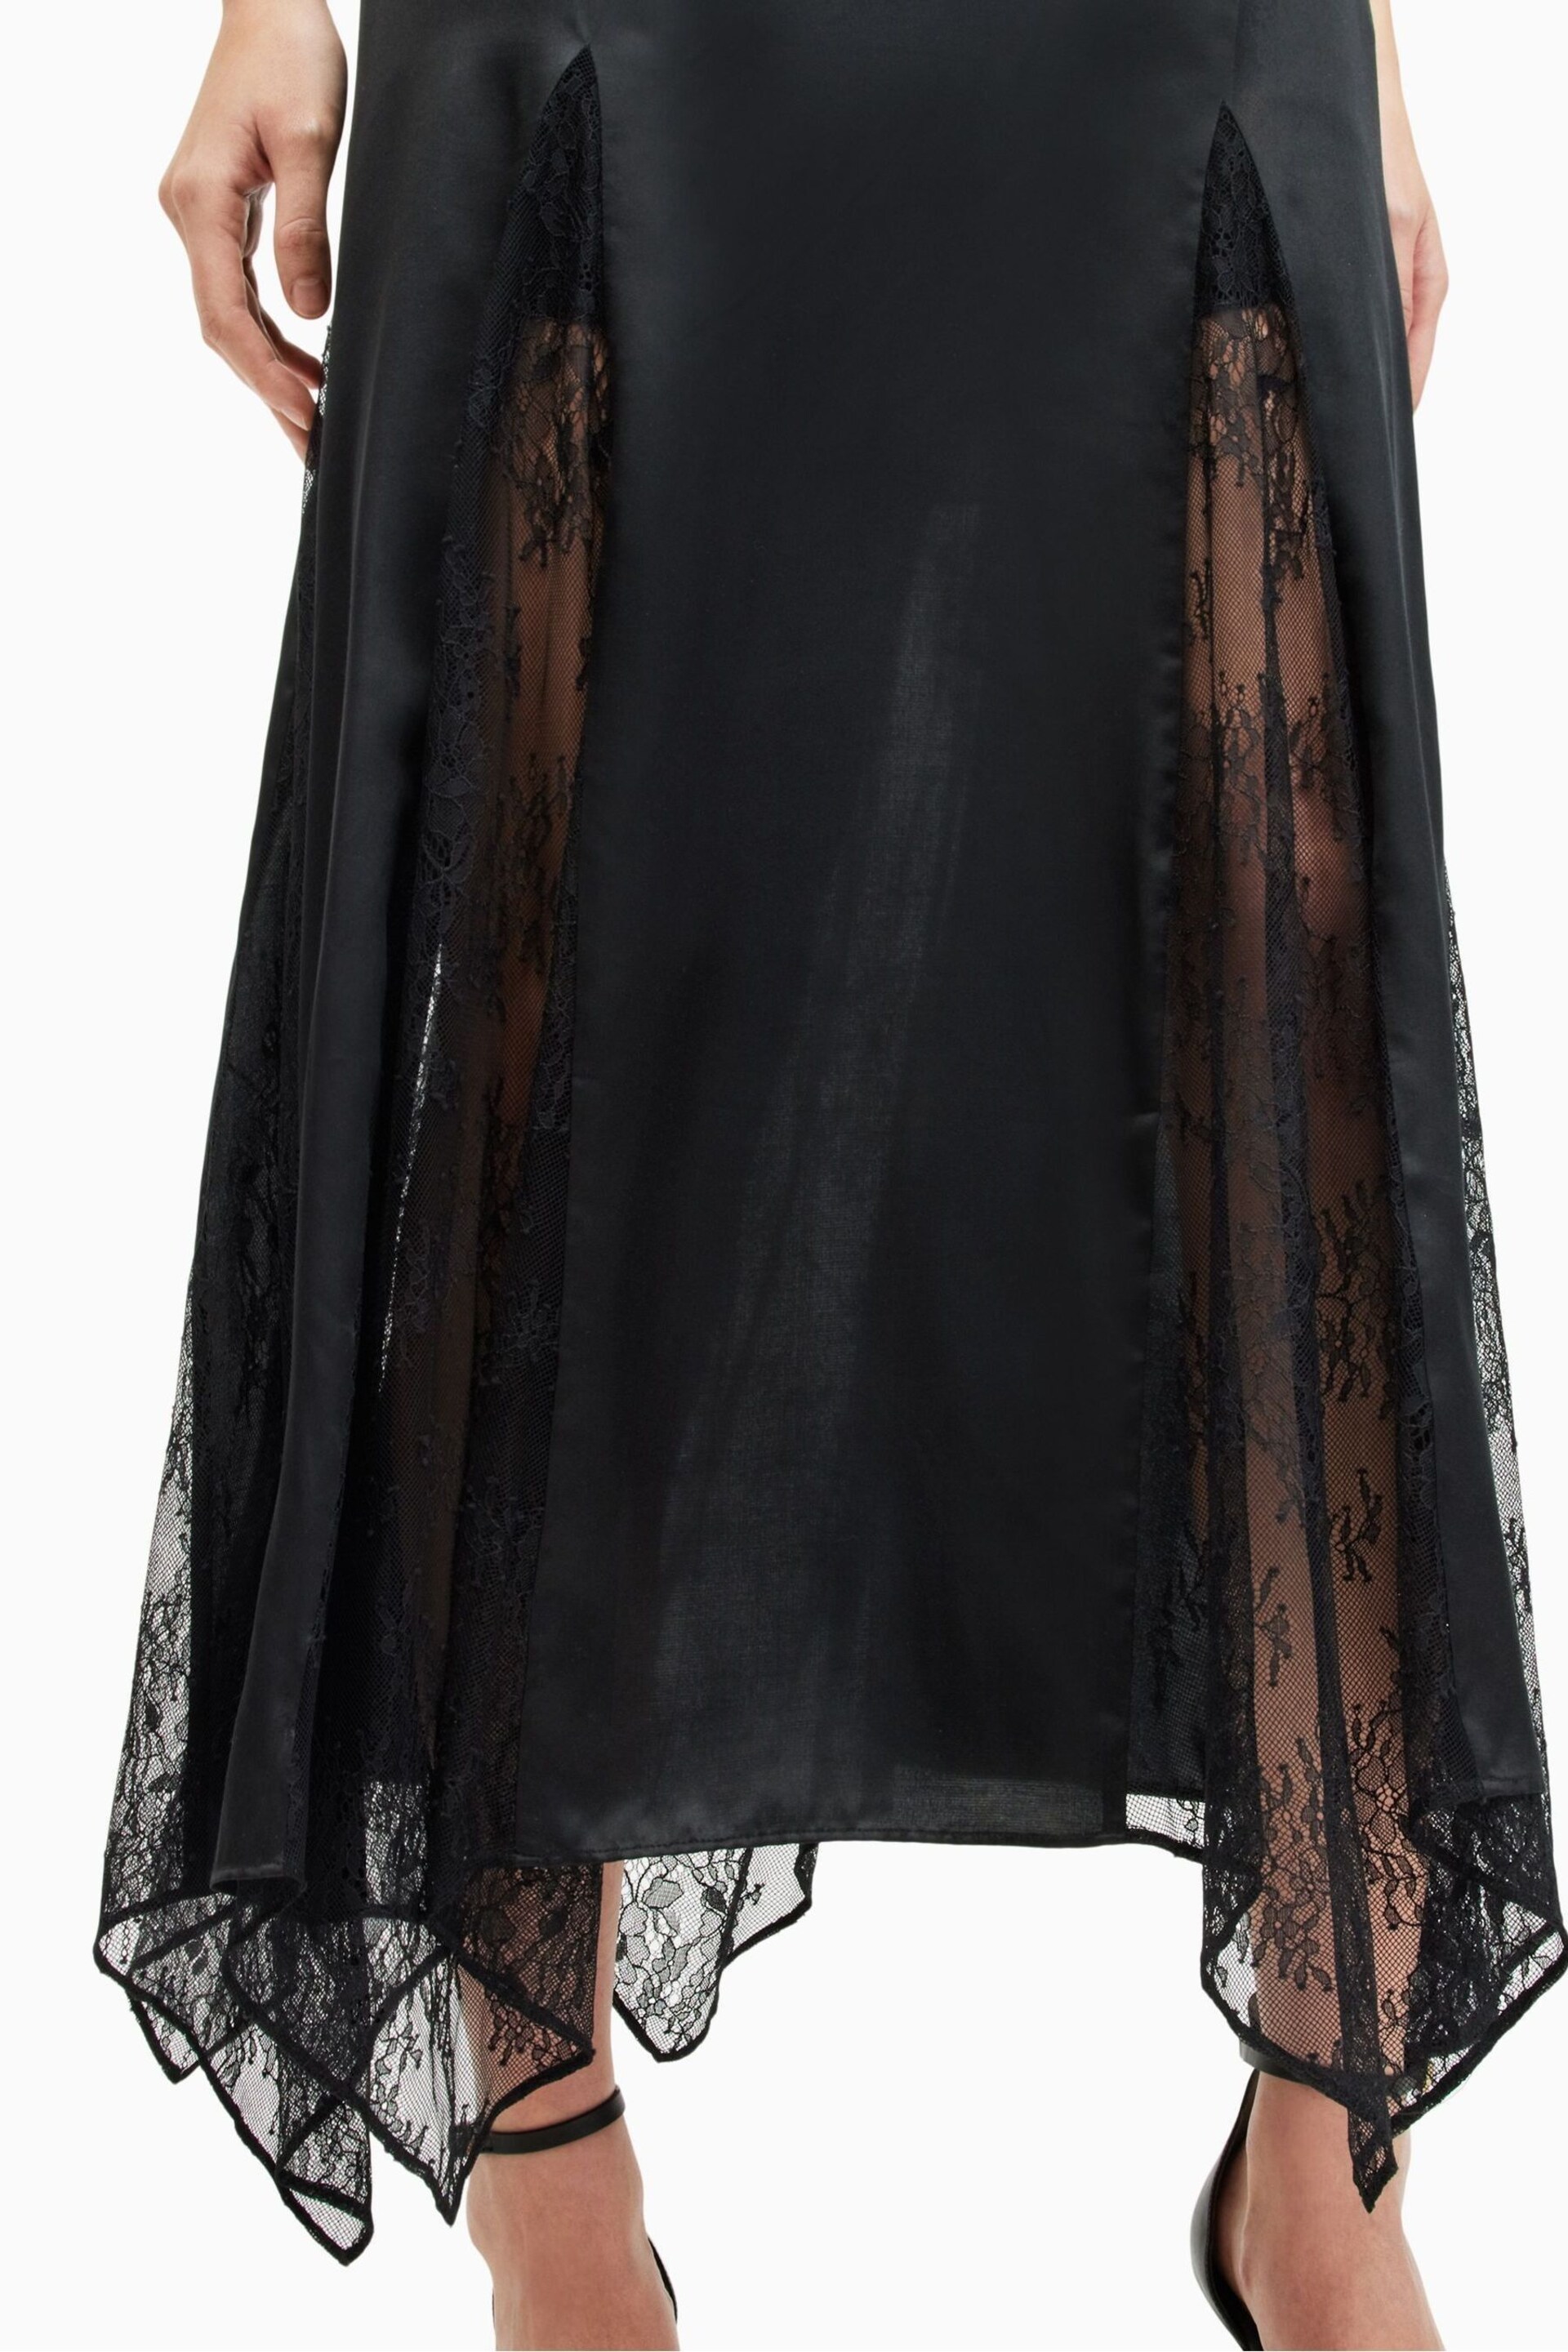 AllSaints Black Jasmine Dress - Image 4 of 7